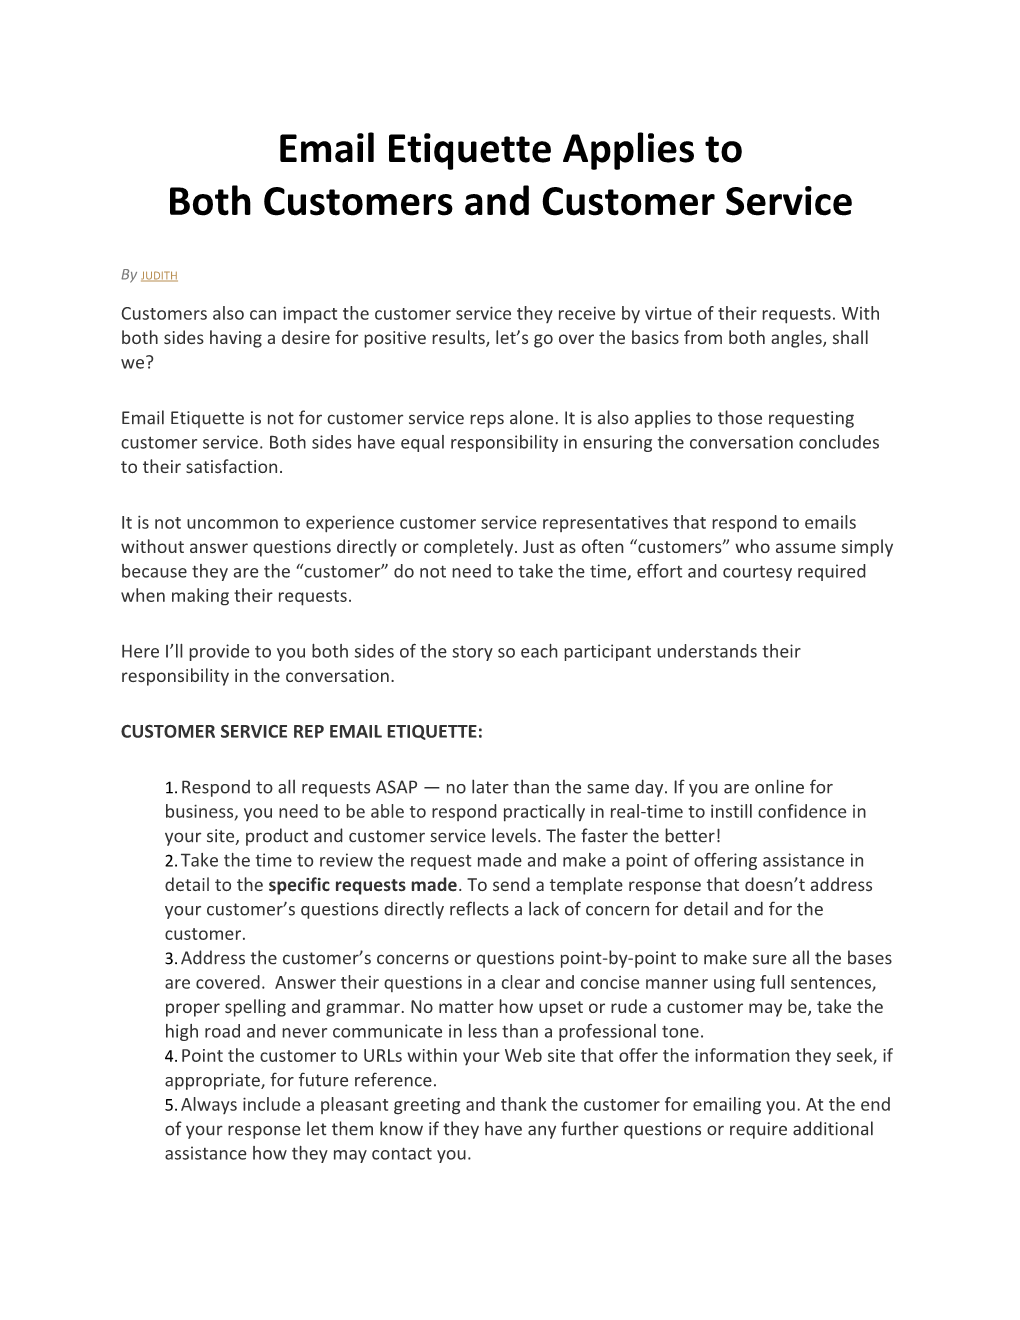 Both Customers and Customer Service